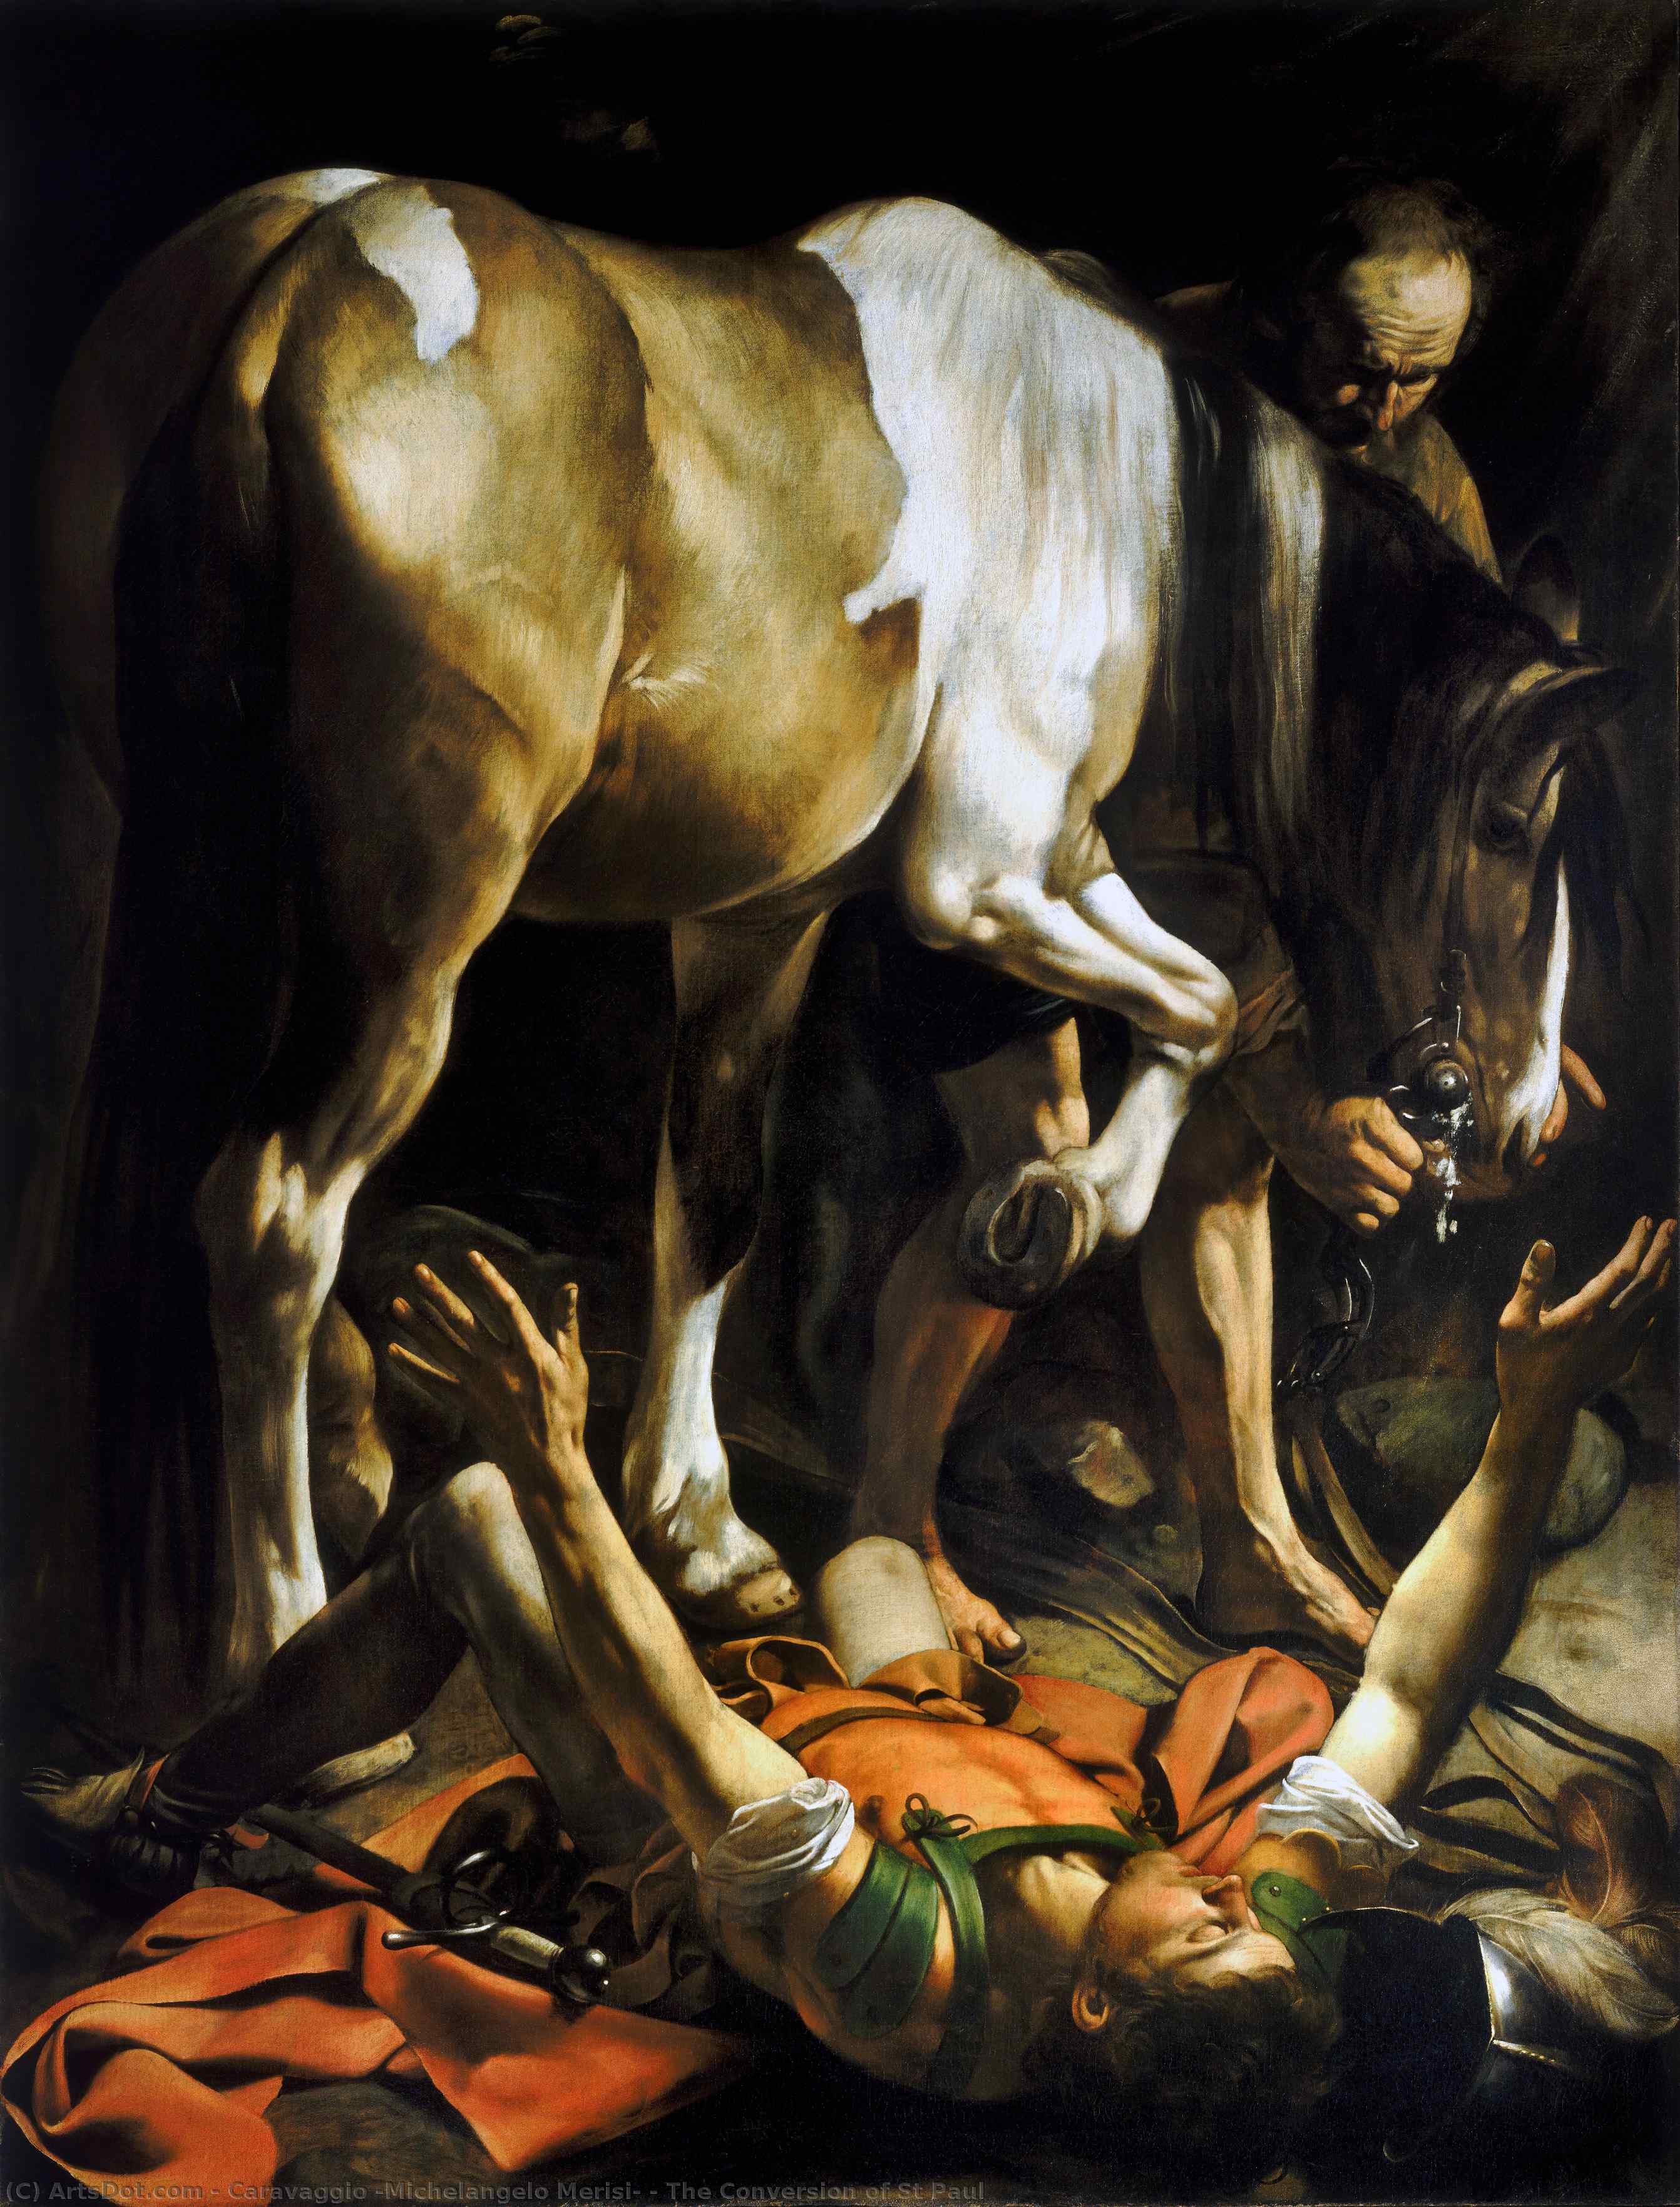 Order Oil Painting Replica The Conversion of St Paul, 1600 by Caravaggio (Michelangelo Merisi) (1571-1610, Spain) | ArtsDot.com